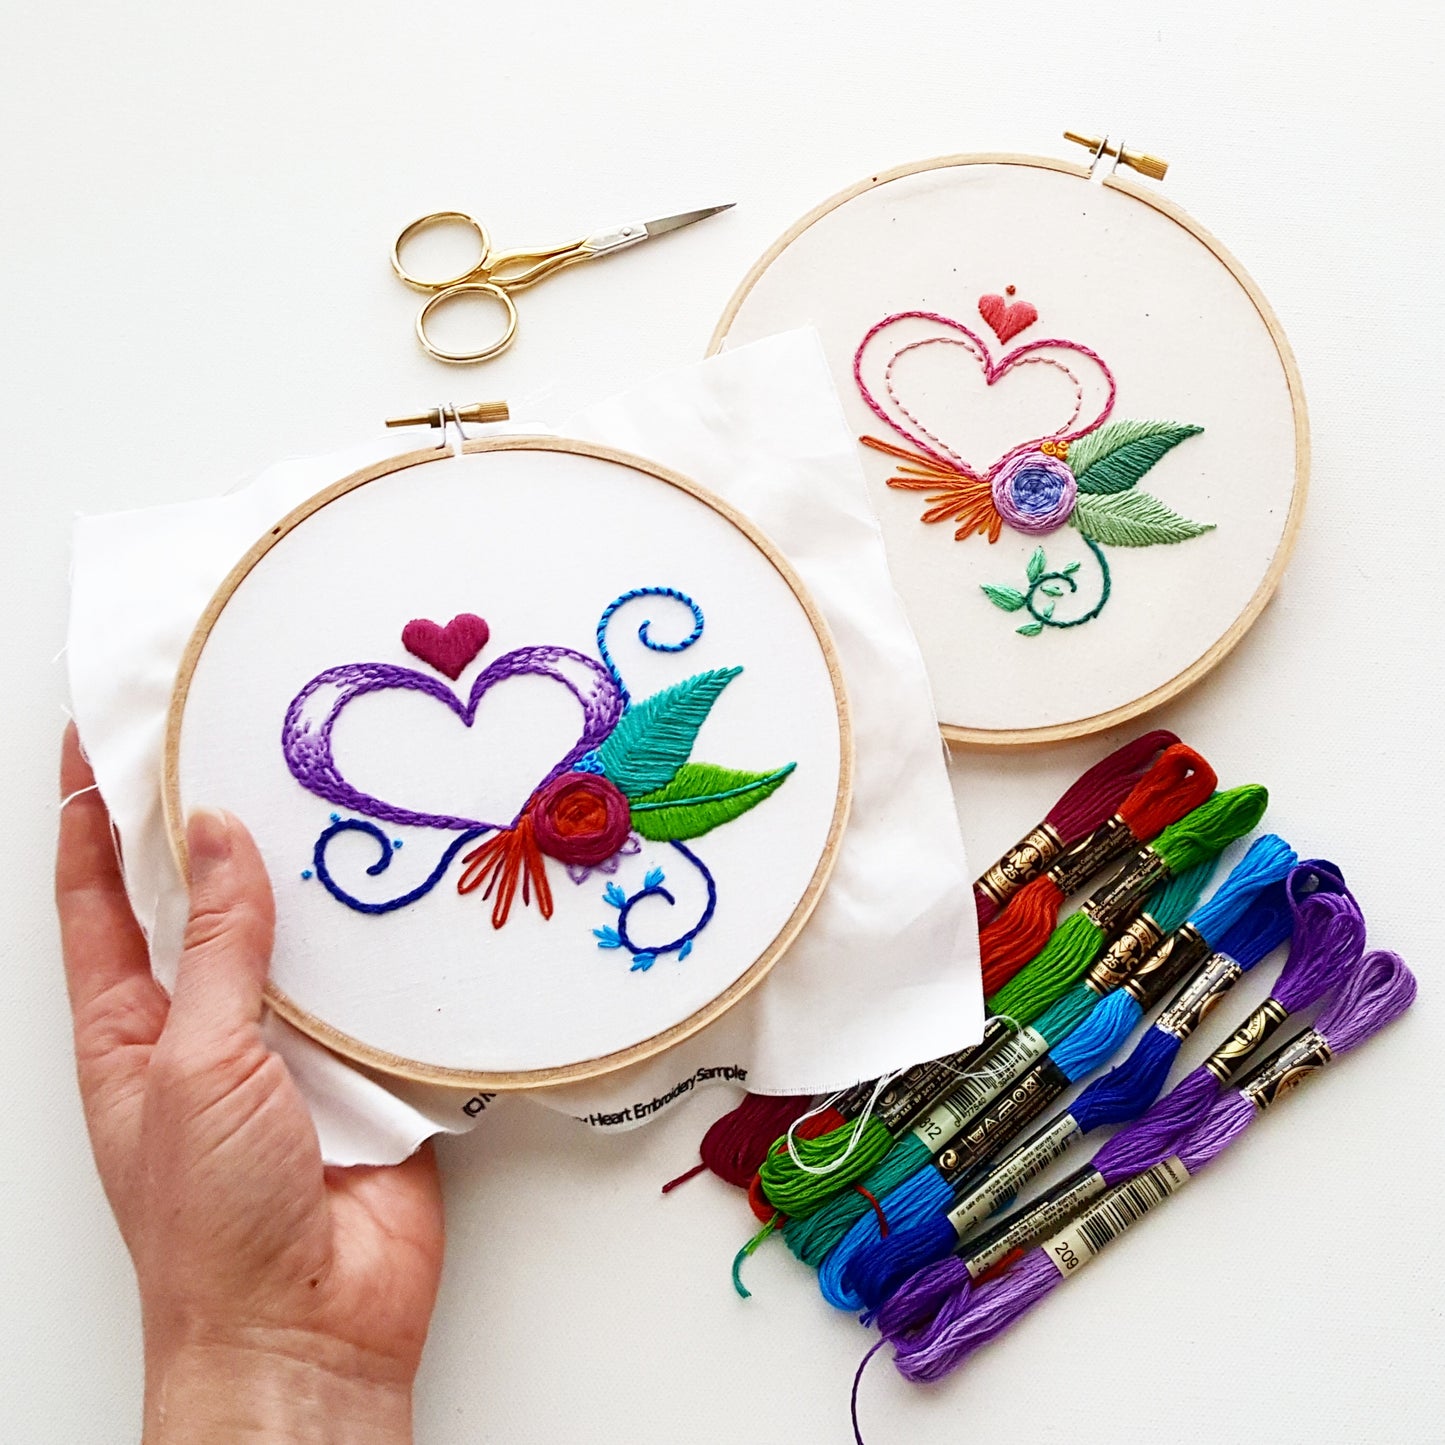 FREE Embroidery Sampler Digital Download